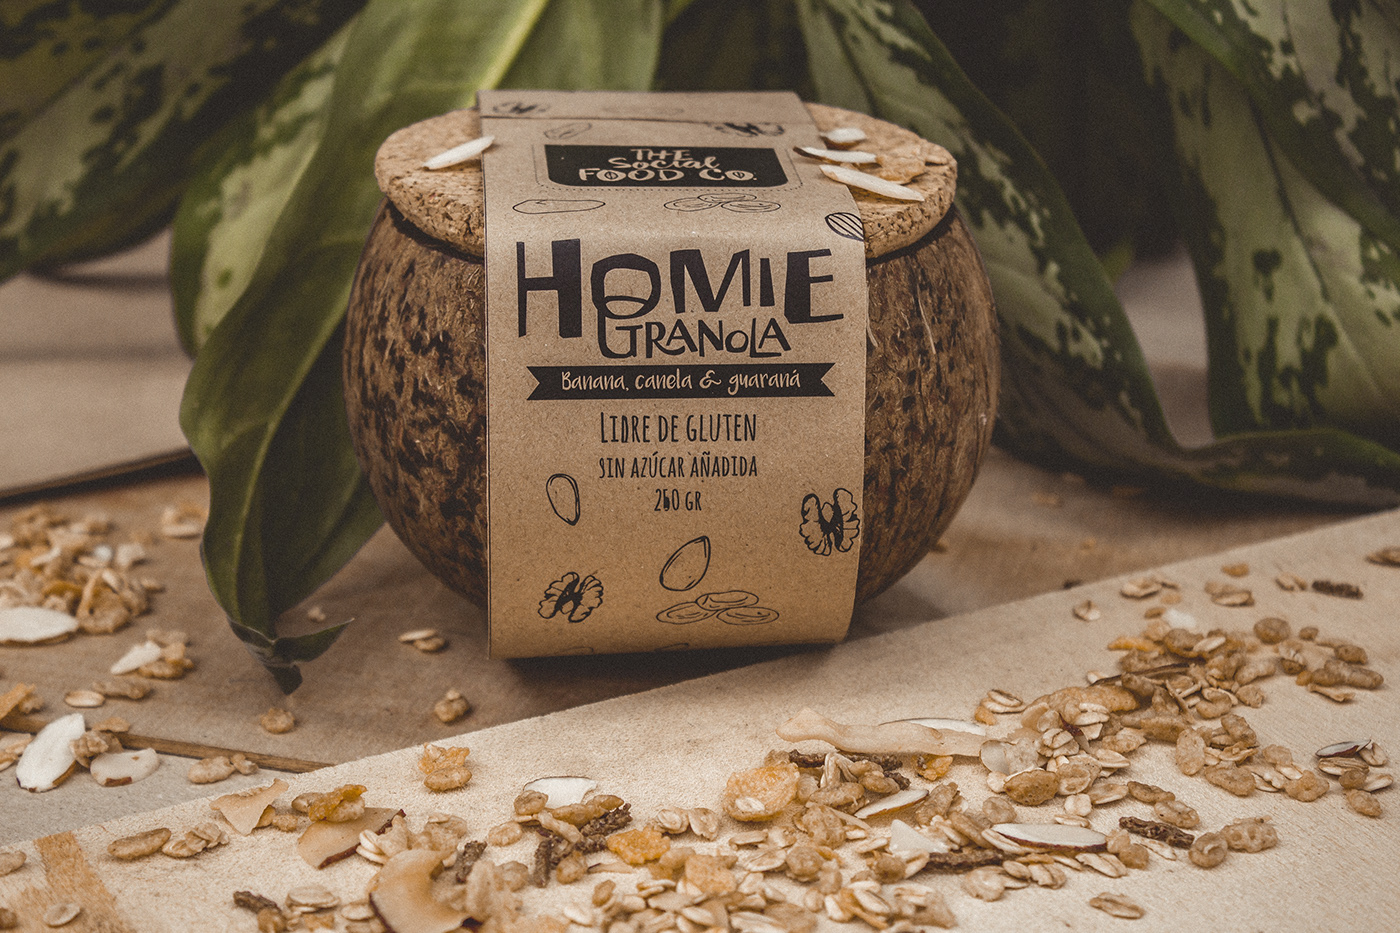 empaque granola Coco acai producto Packaging Coconut product eco ecologico